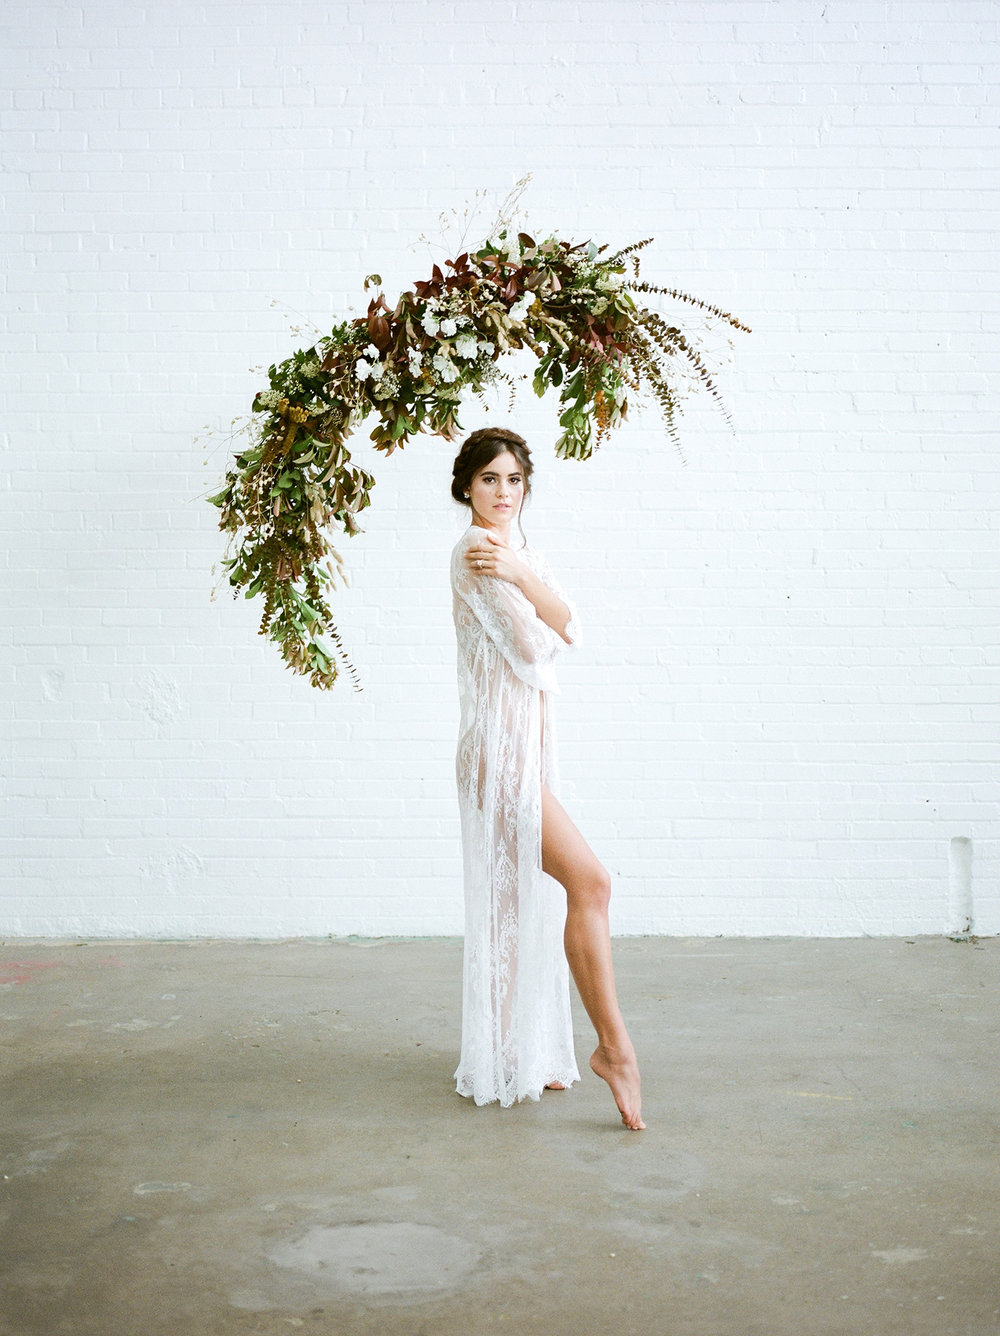 Wedding Floral Design Dallas - Olive Grove Design - Mimimalist Fall Wedding - 00101.jpg